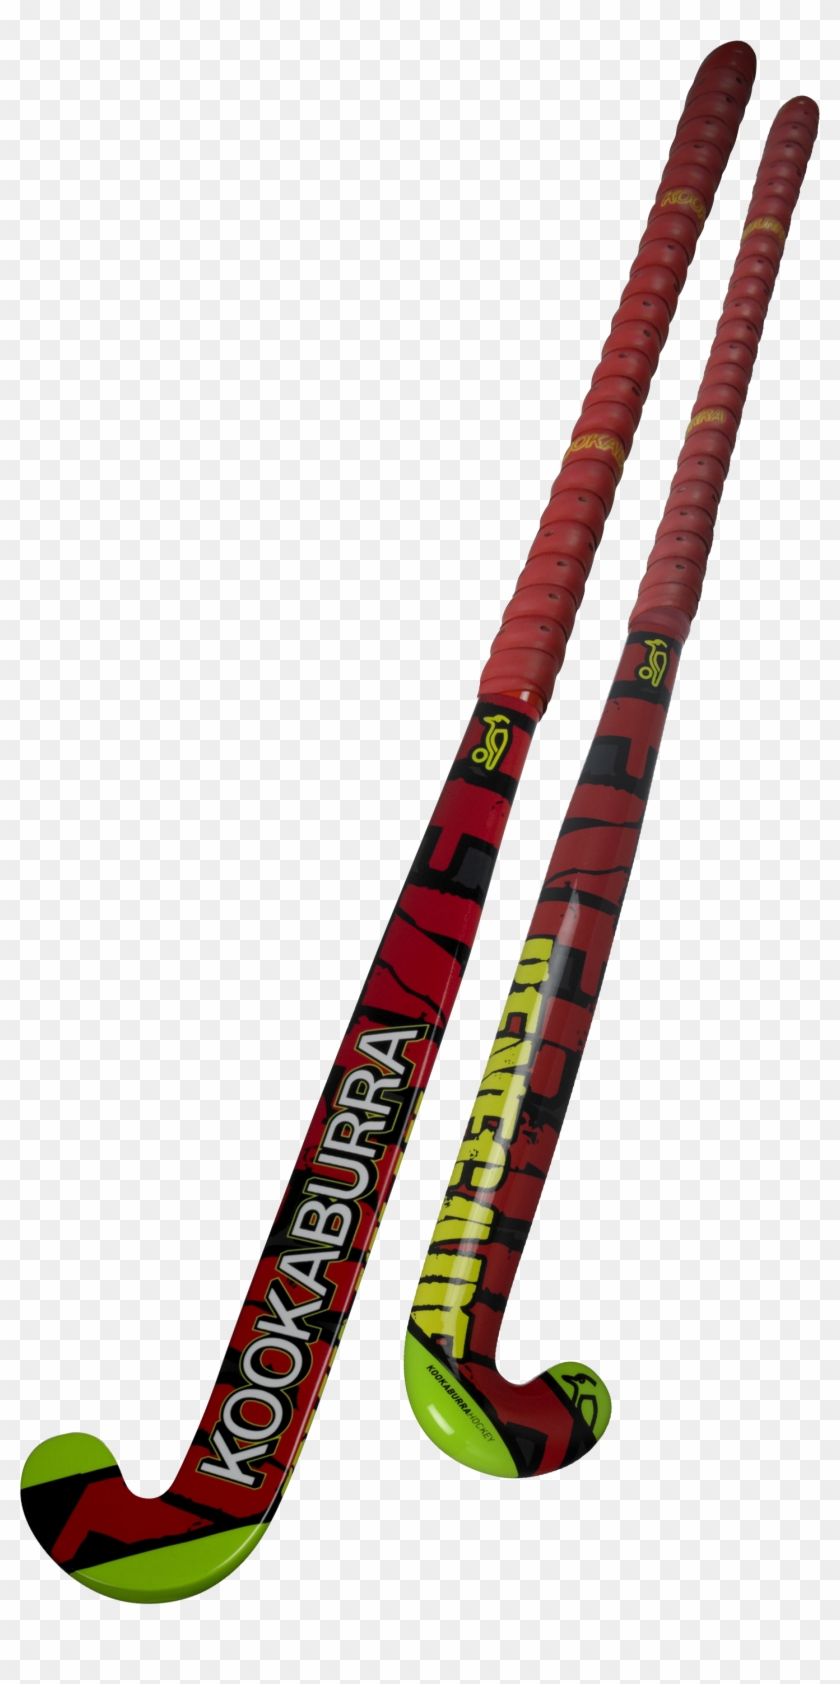 Svg Transparent Library Clipart Field Hockey Sticks - Svg Transparent Library Clipart Field Hockey Sticks #1577876